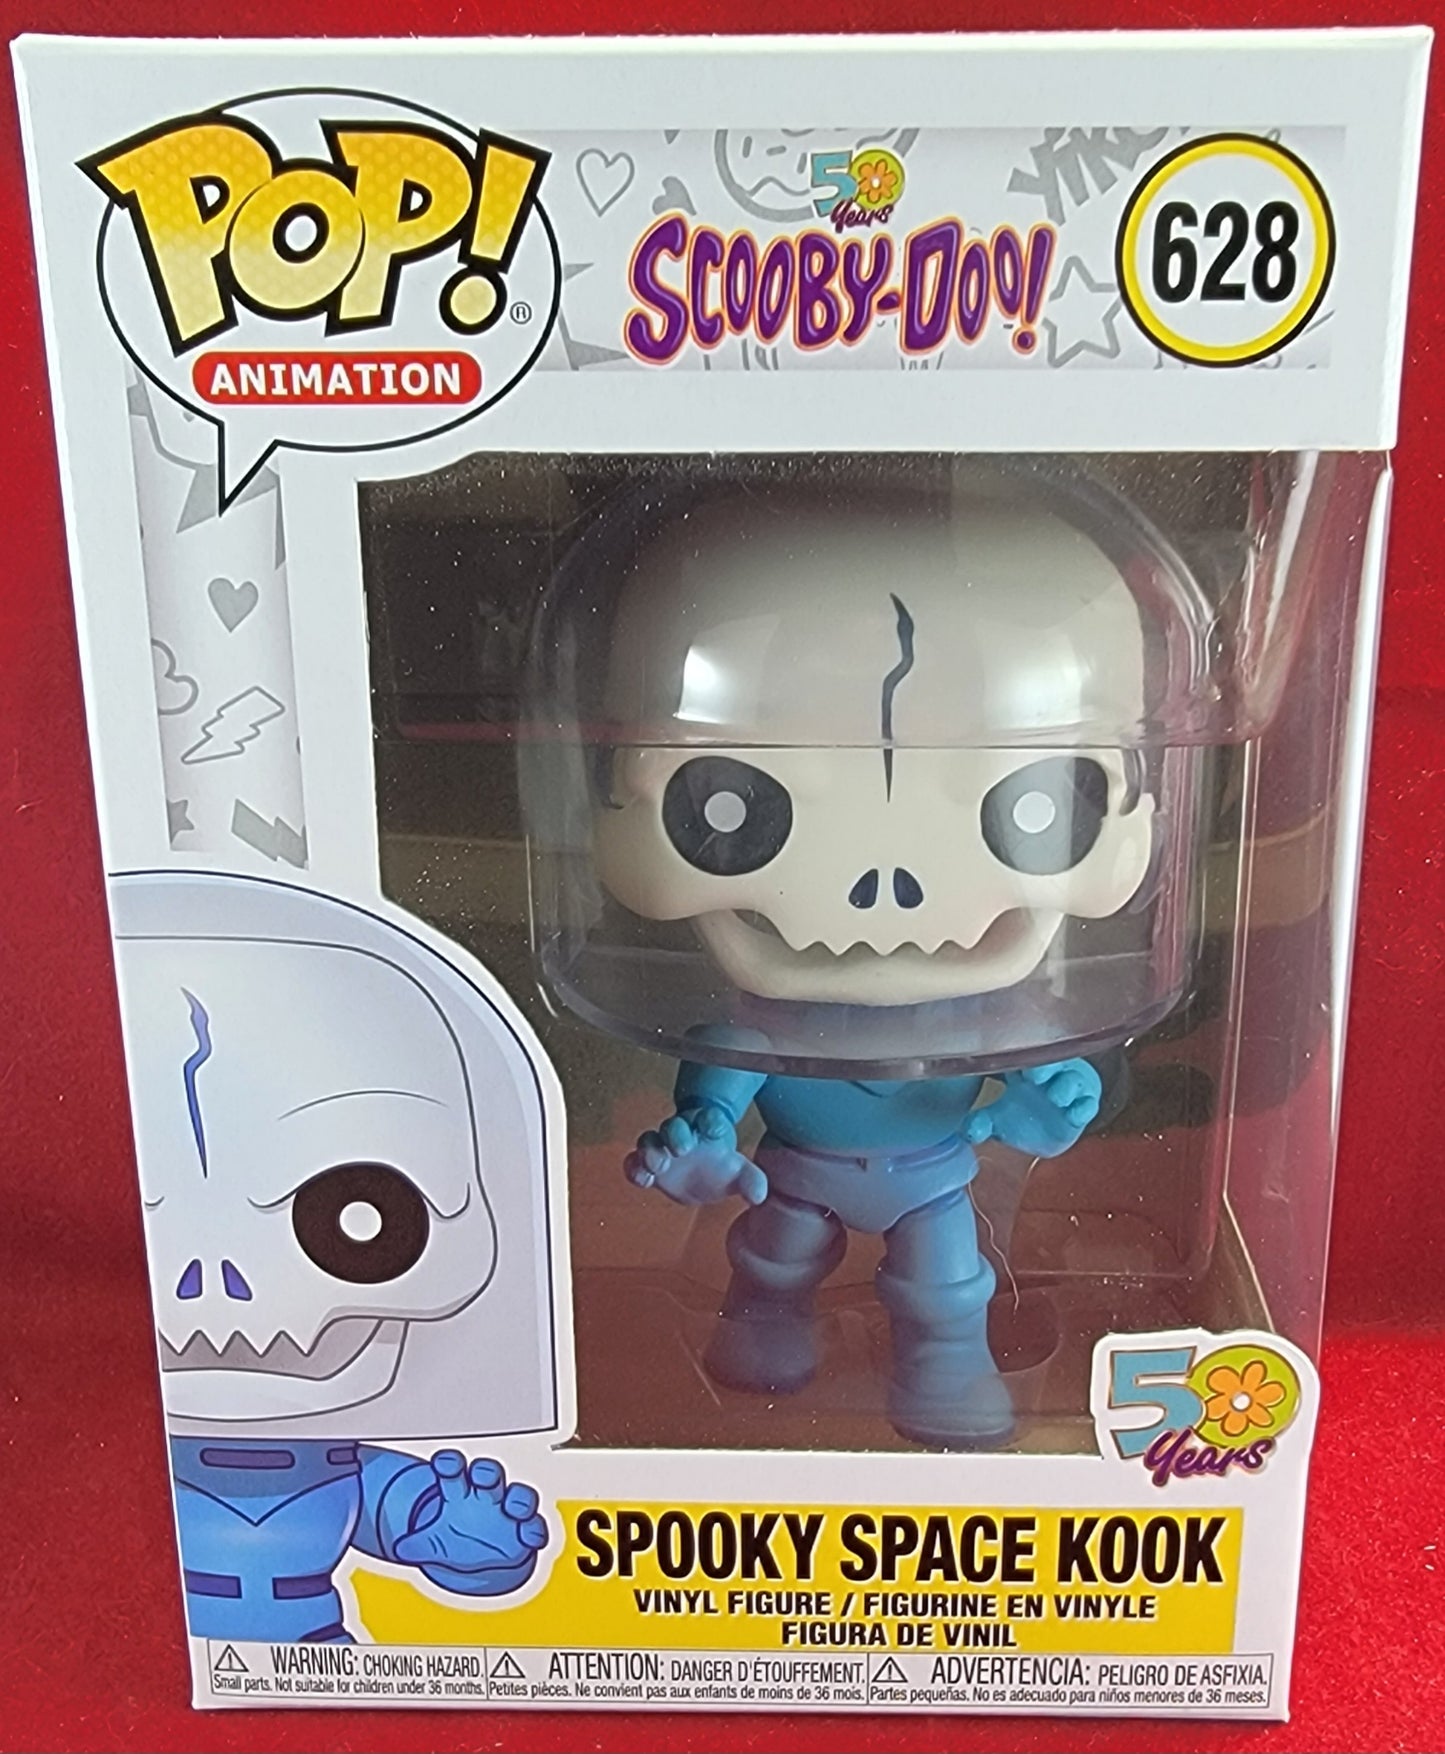 Spooky space kook funko # 628 (nib)
With pop protector